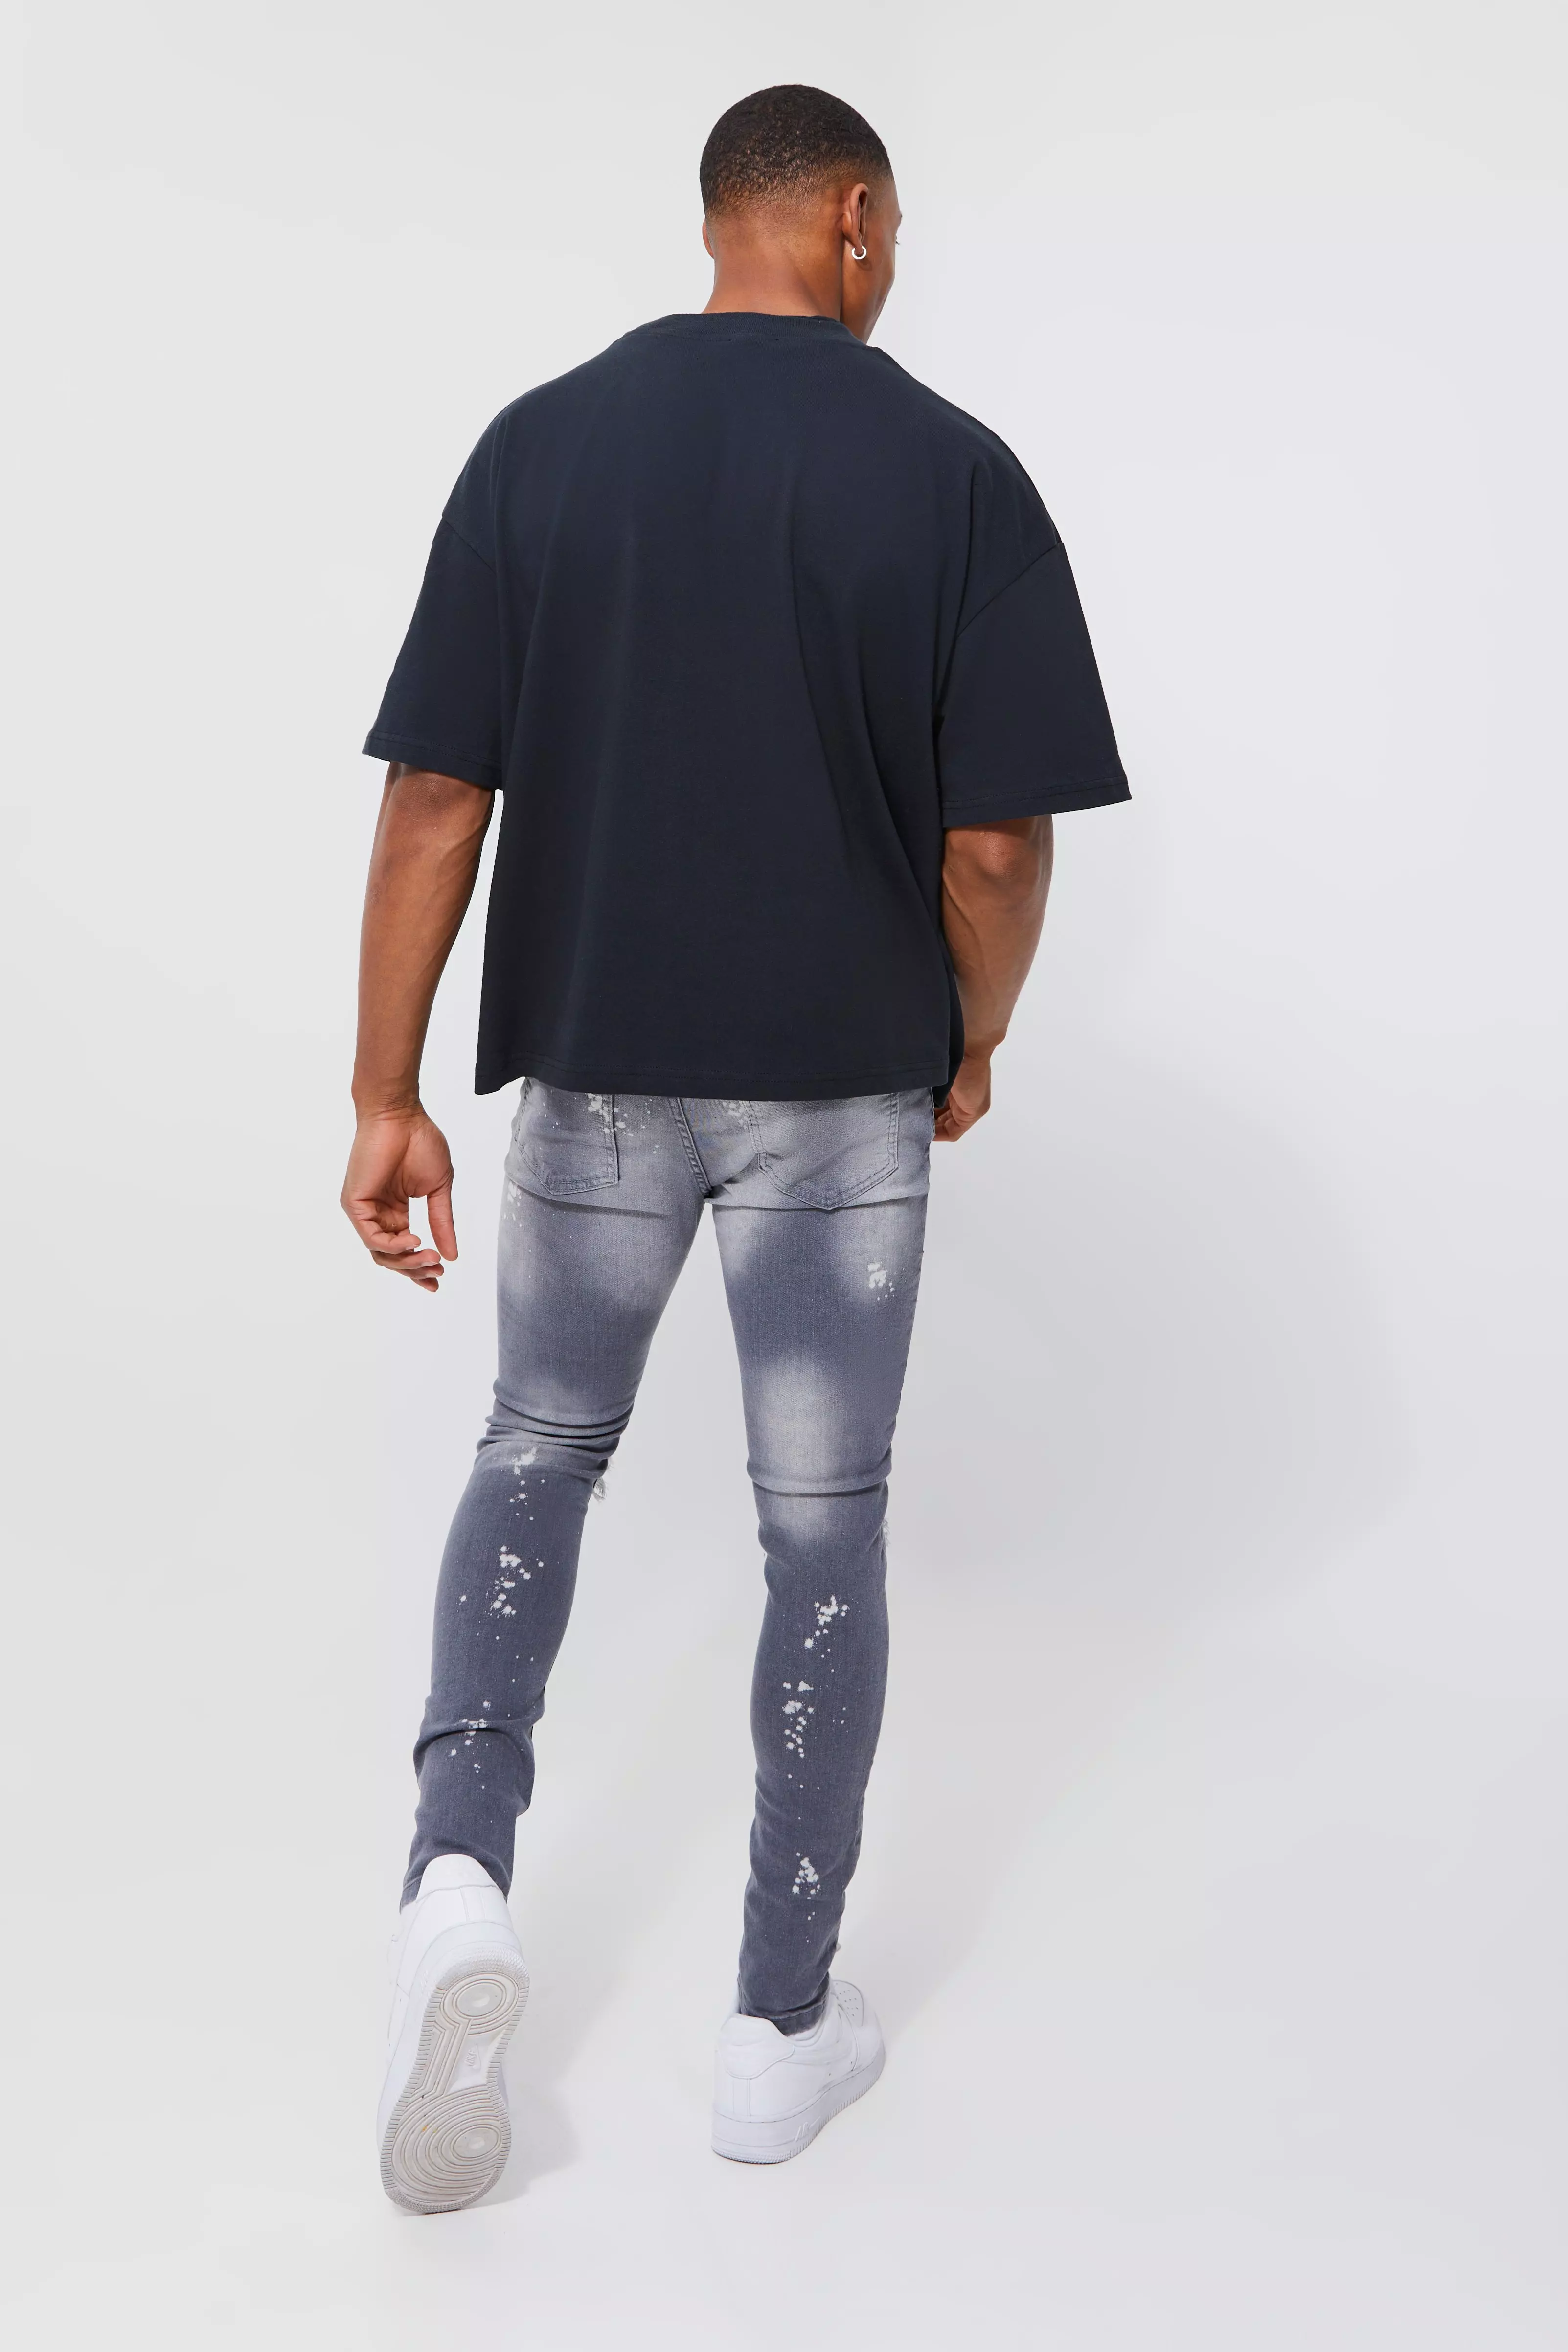 Boohoo Mens Super Skinny Busted Knee Paint Splatter Jeans - Grey 34R